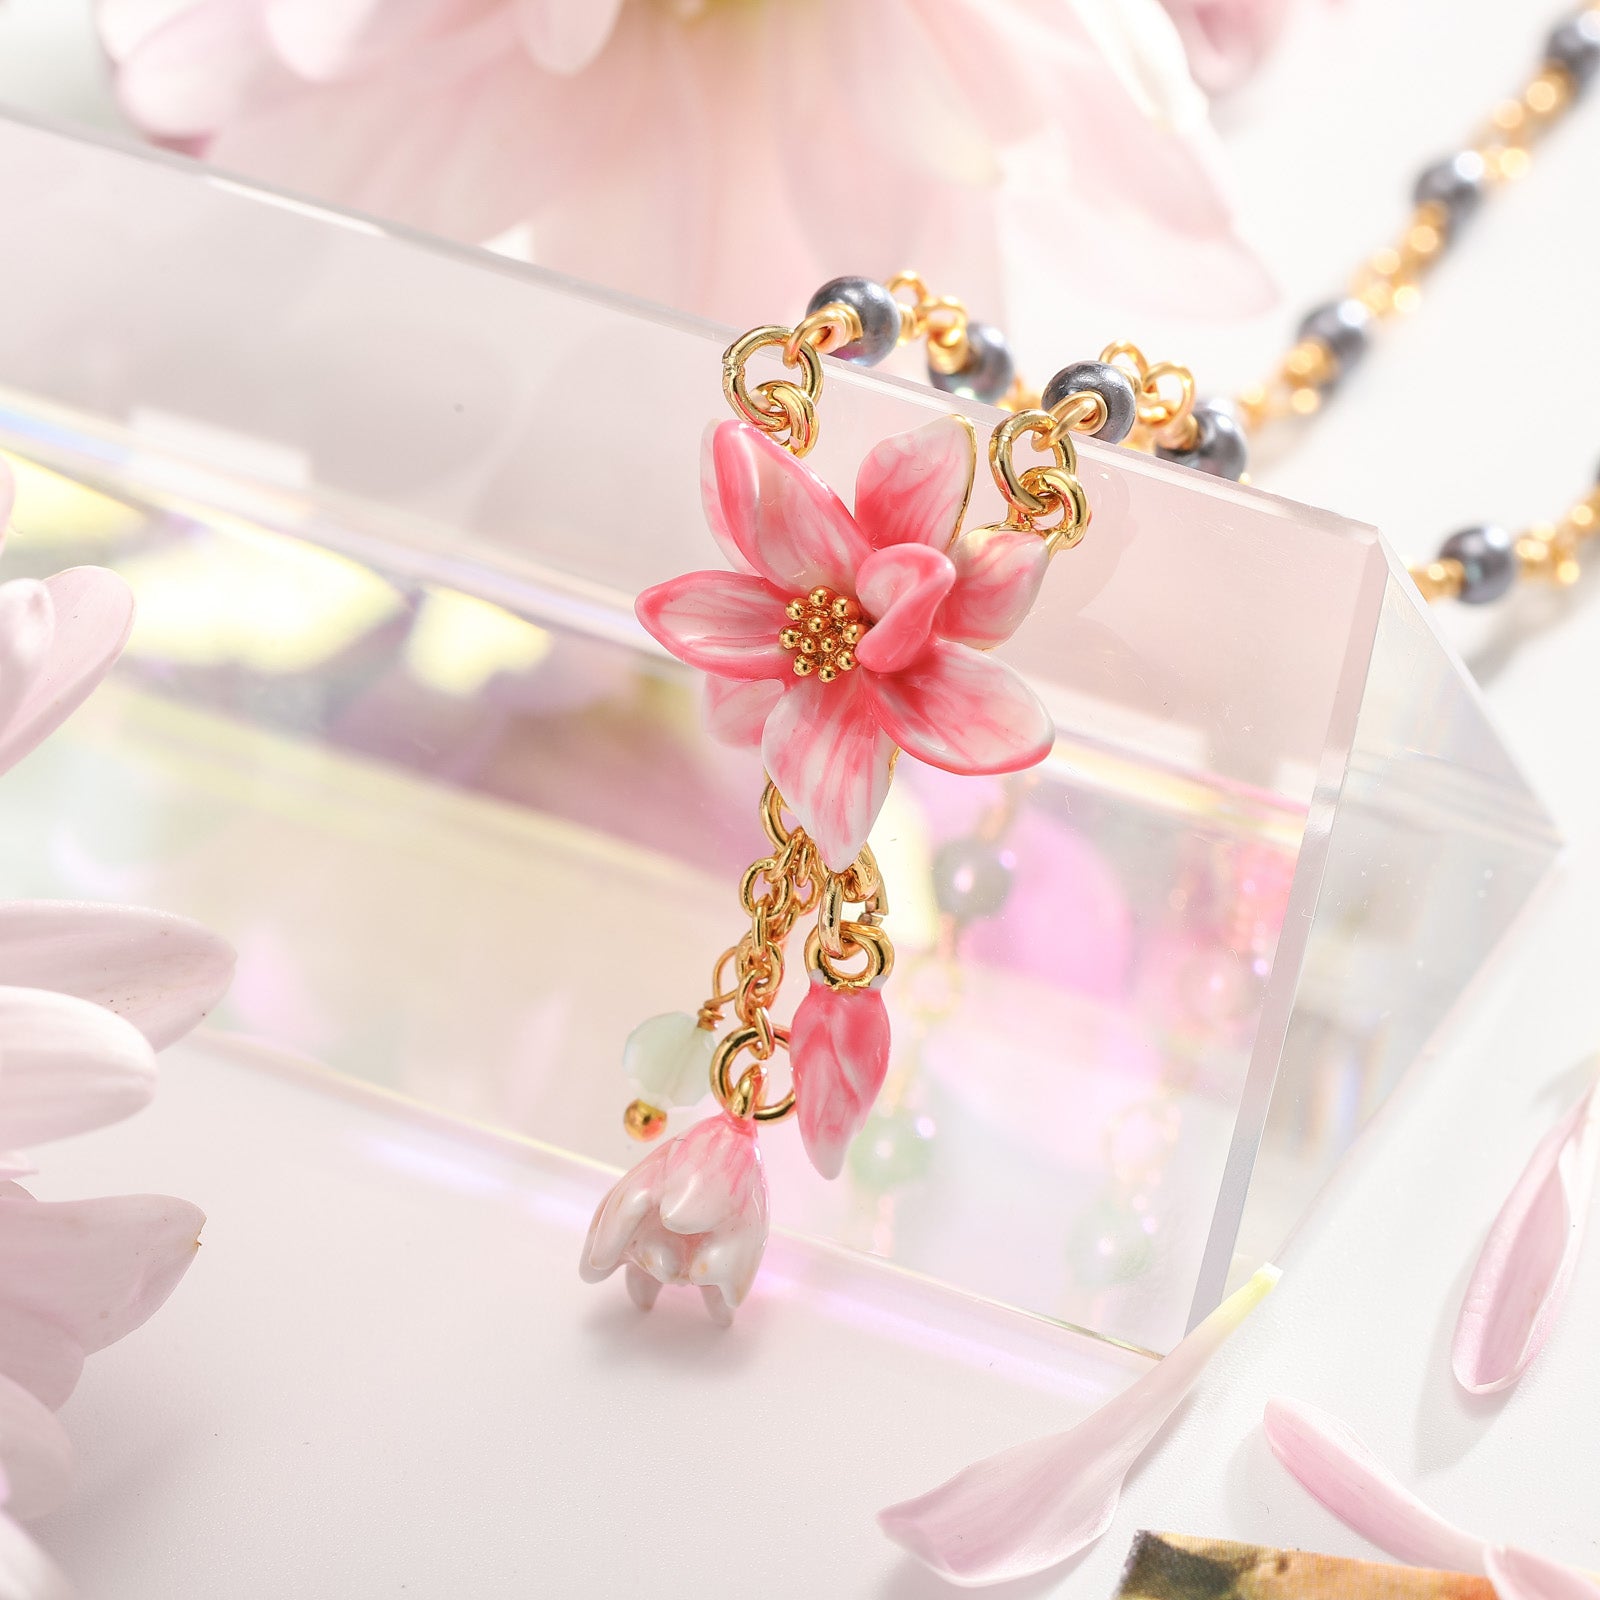 magnolia flower necklace